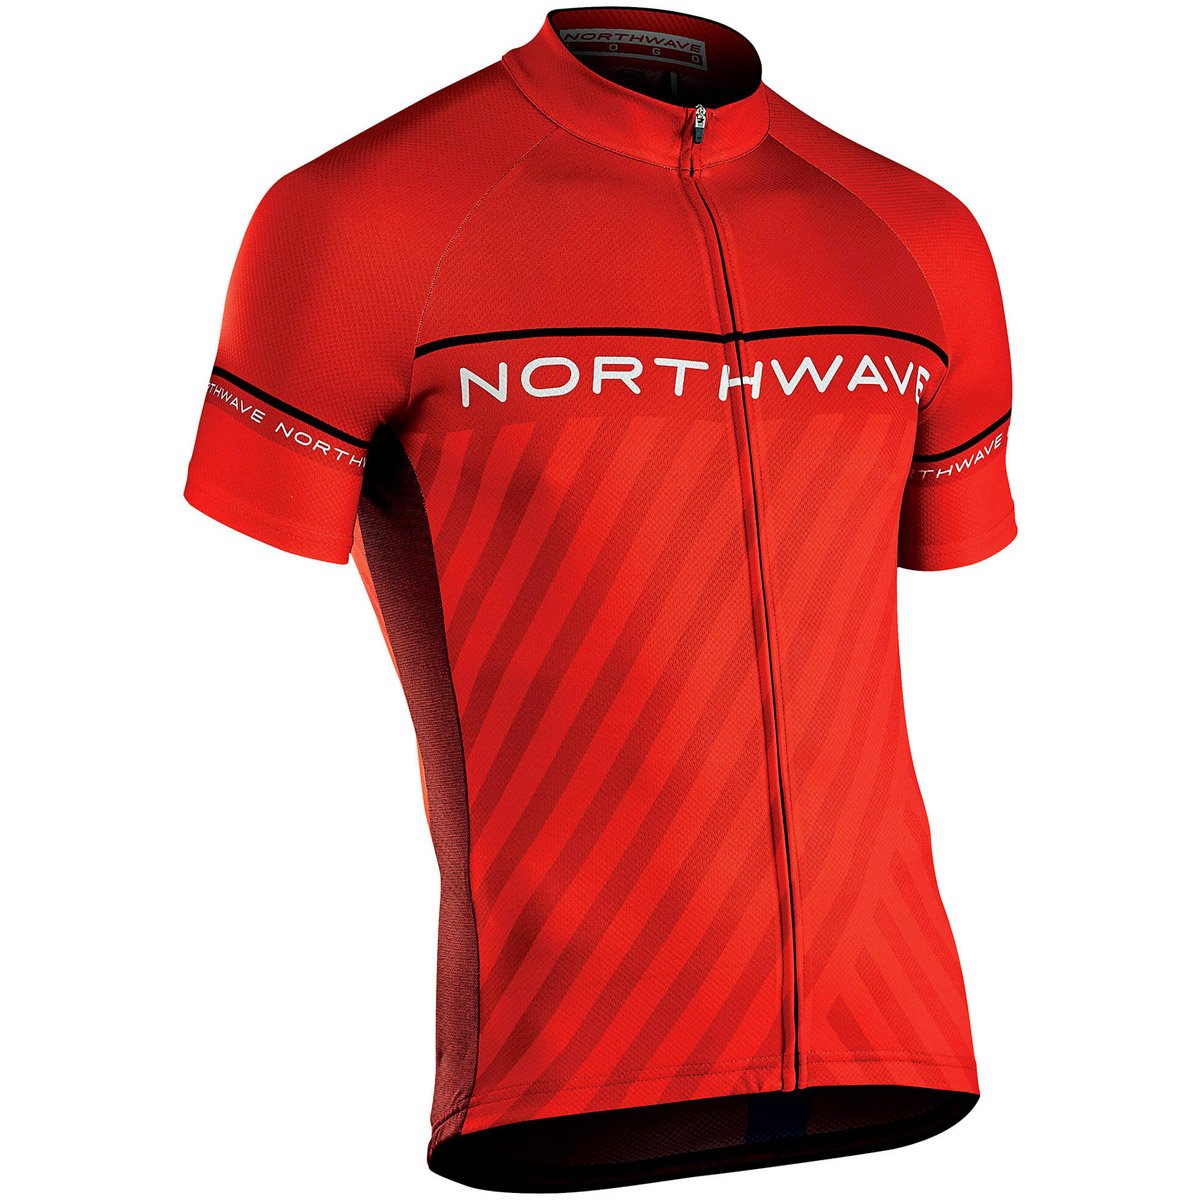 Northwave Logo Red Kids Jersey-Northwave-Chain Driven Cycles-Bike Shop-Ireland